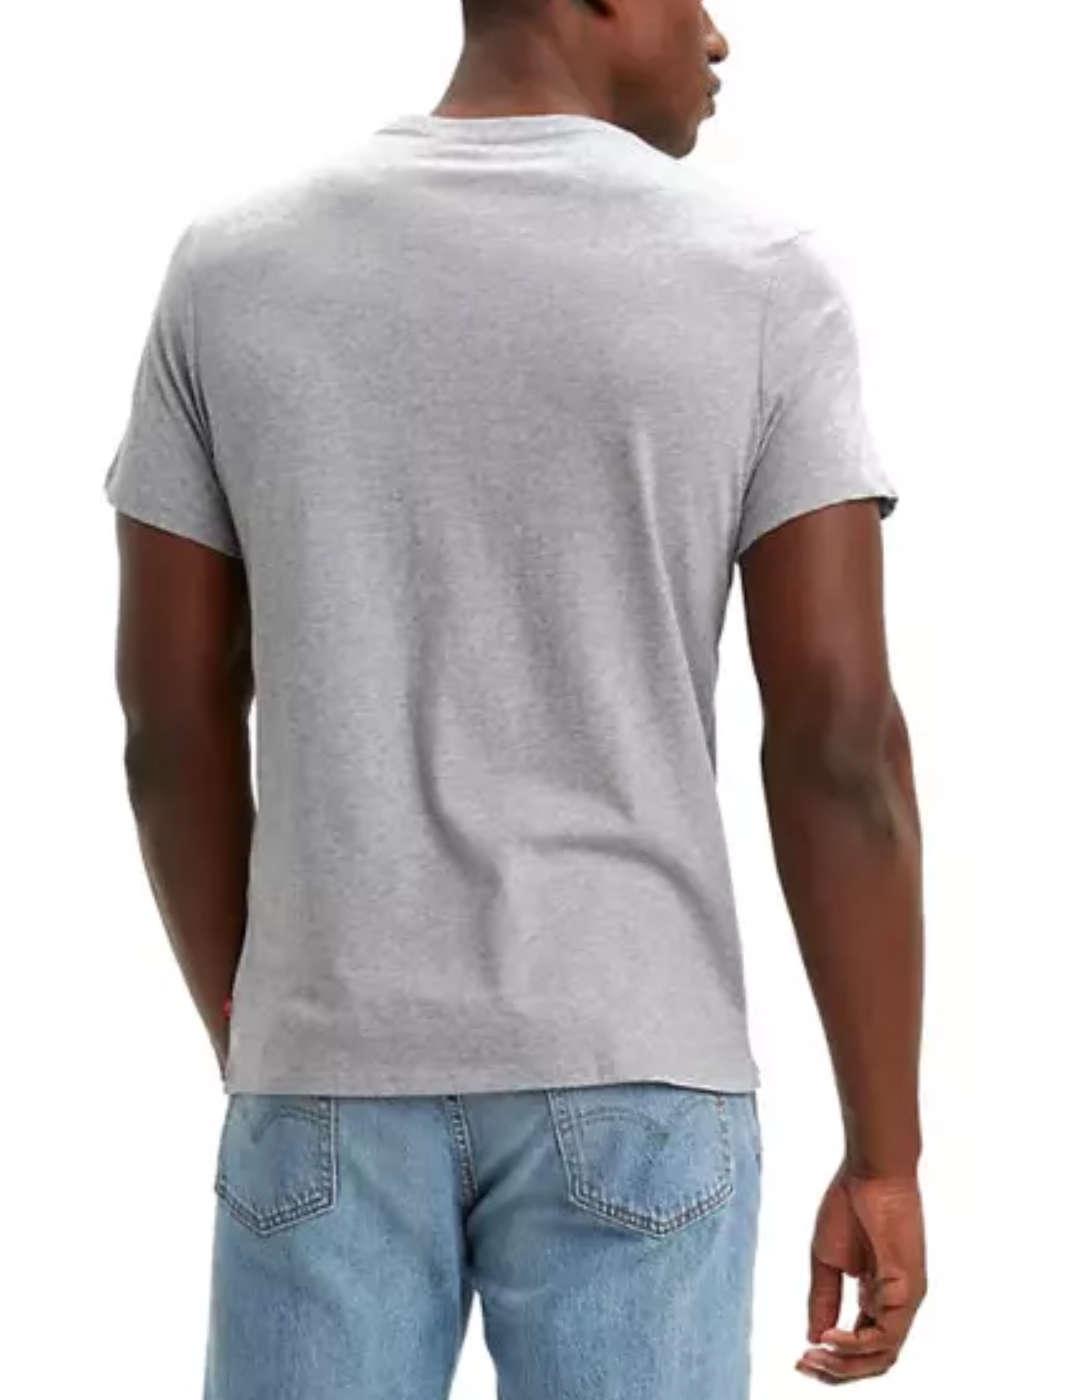 Camiseta levis logo gris de manga corta hombre-p22